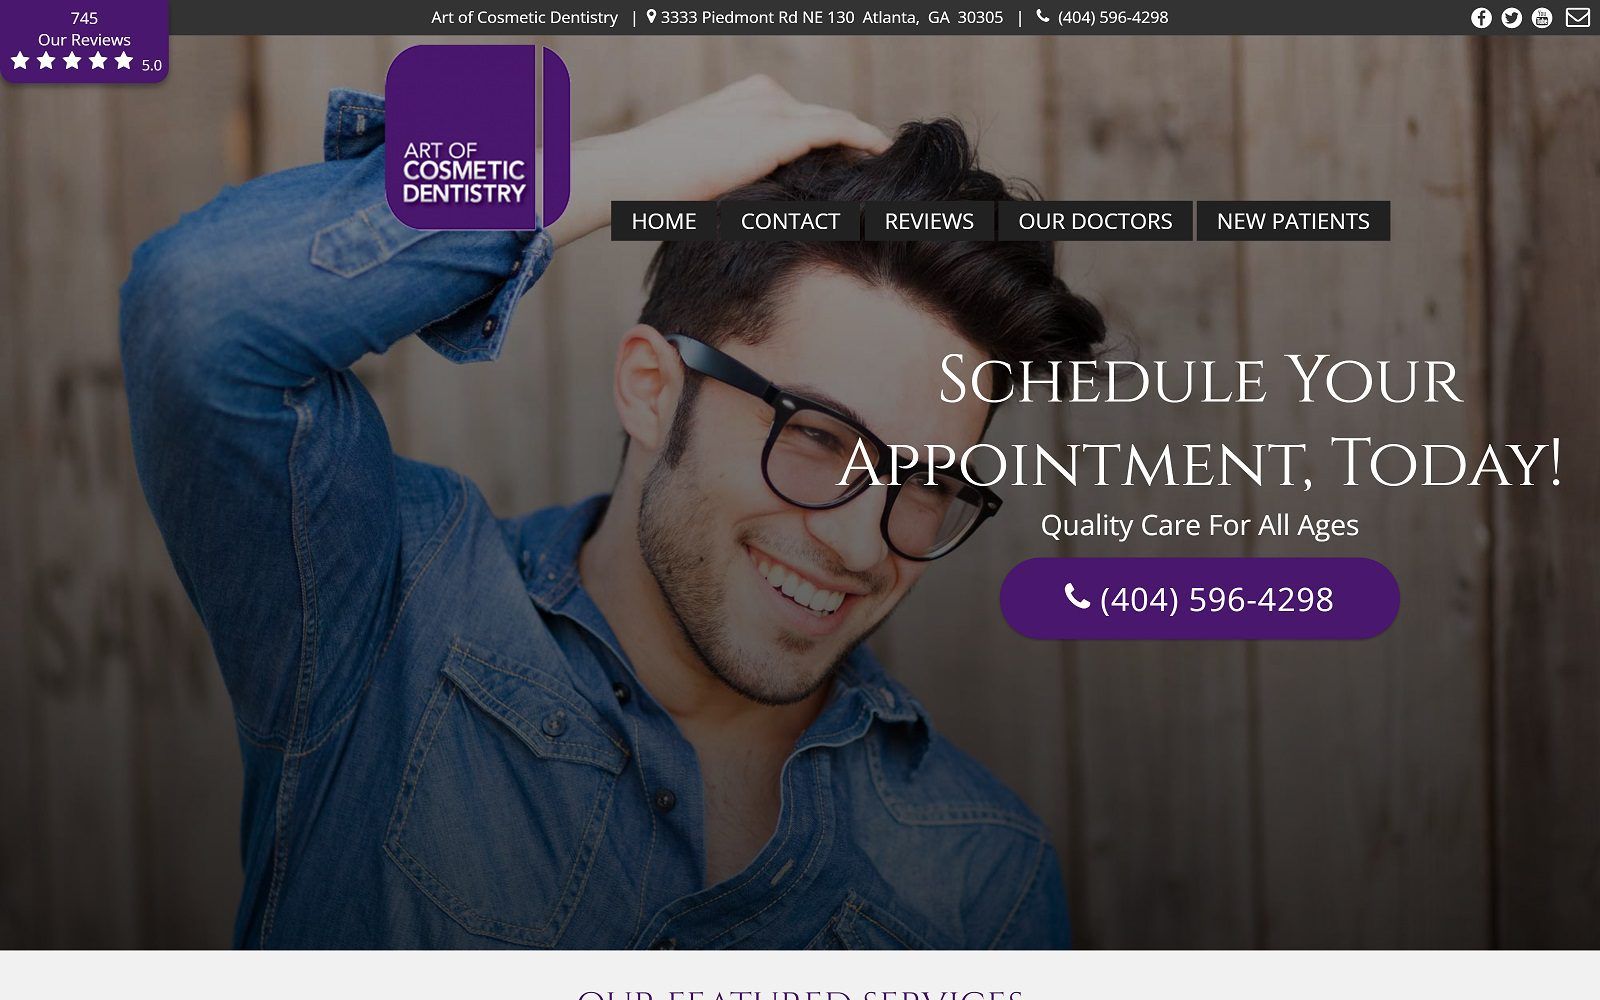 The screenshot of art of cosmetic dentistry website